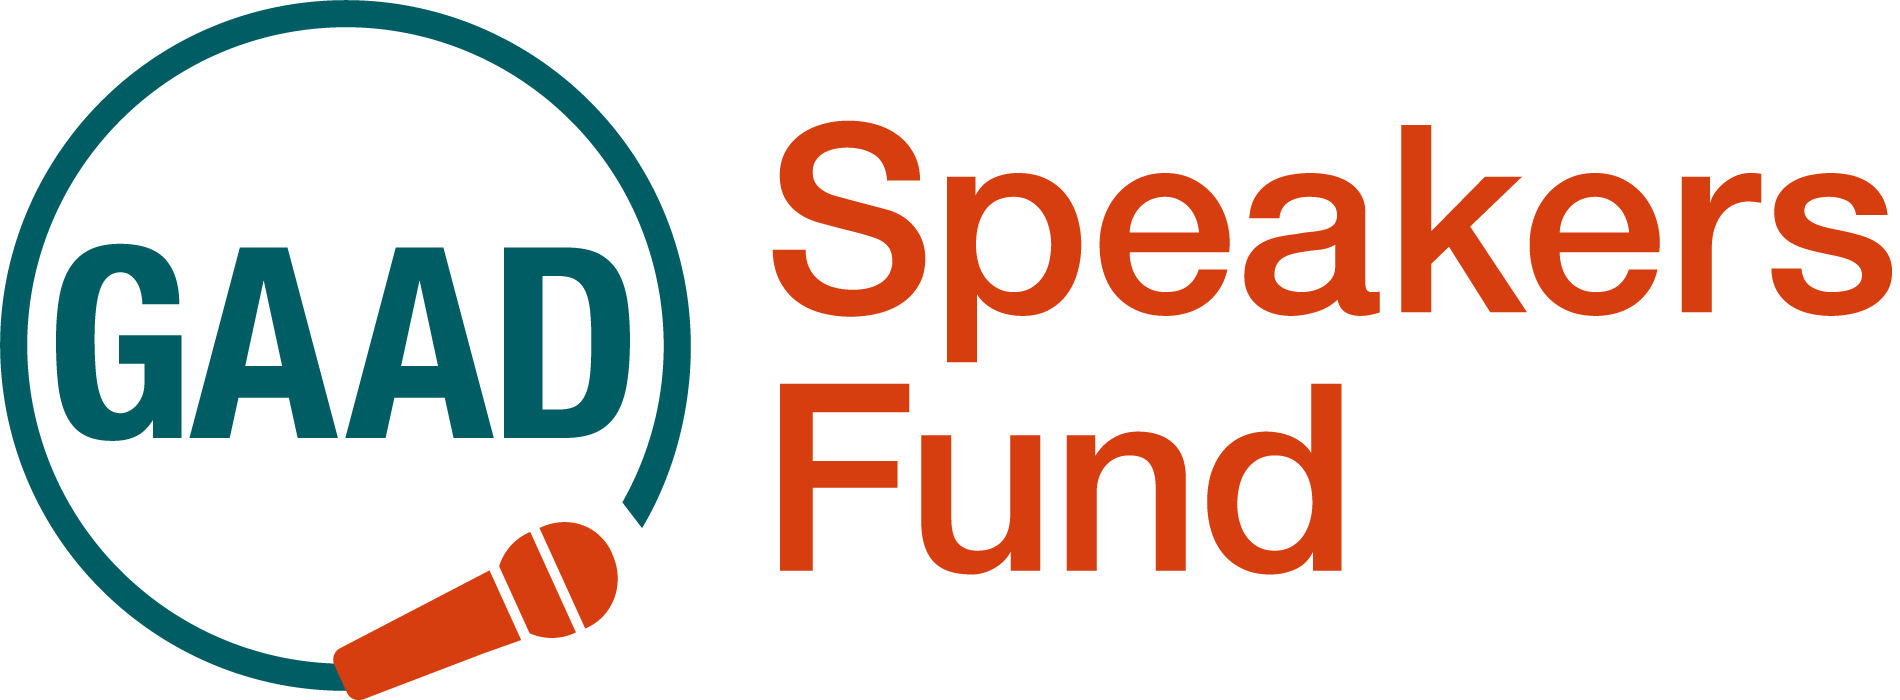 GAAD Speakers Fund Logo